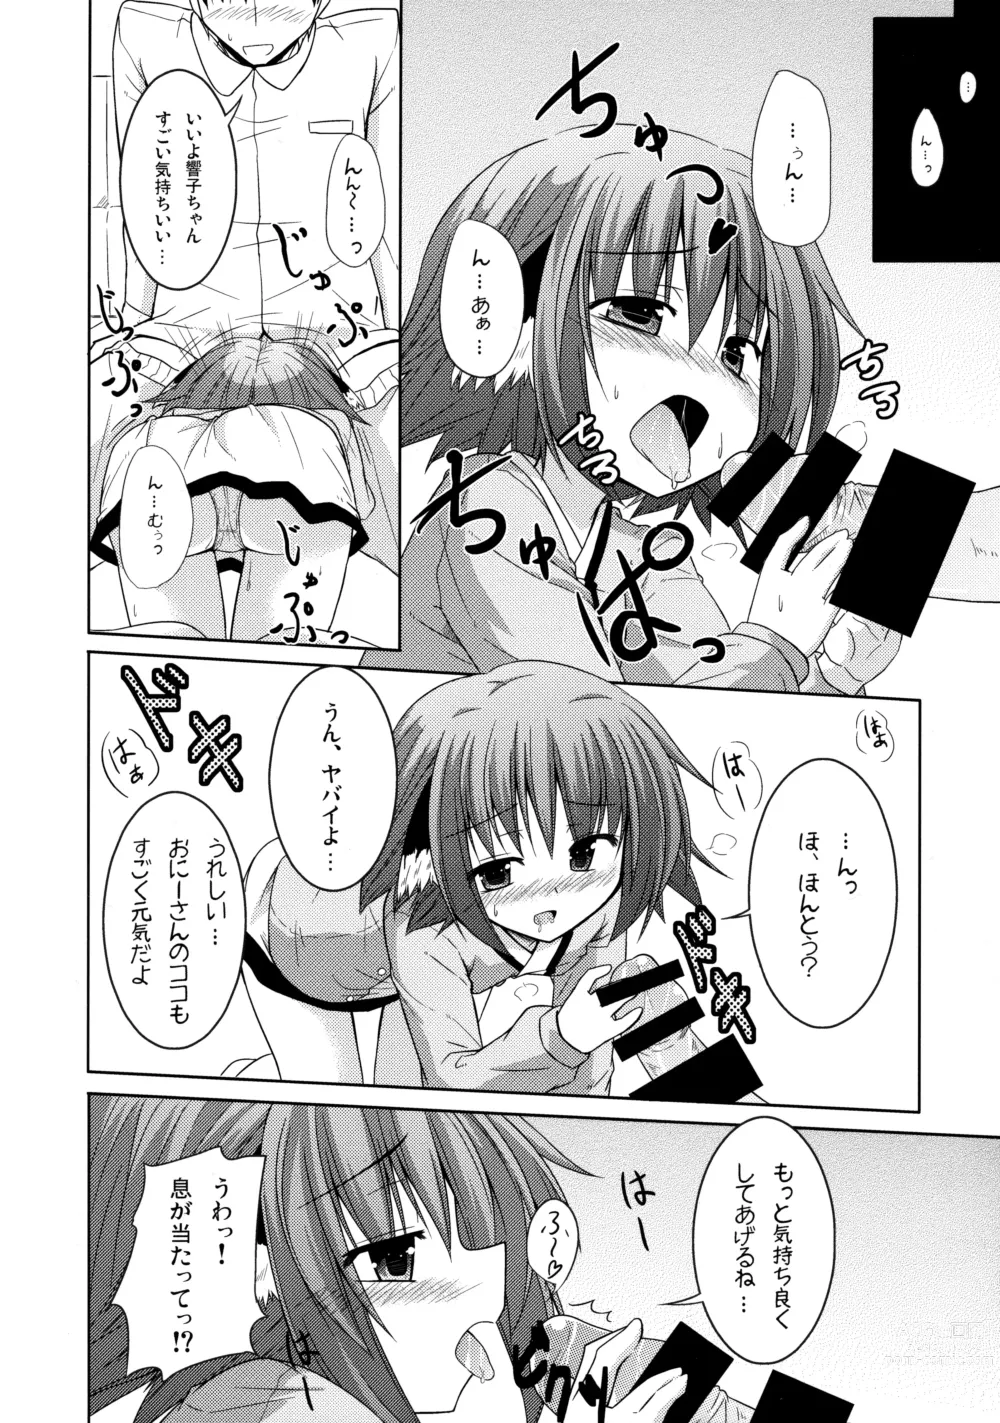 Page 9 of doujinshi Kyouko no Hibi